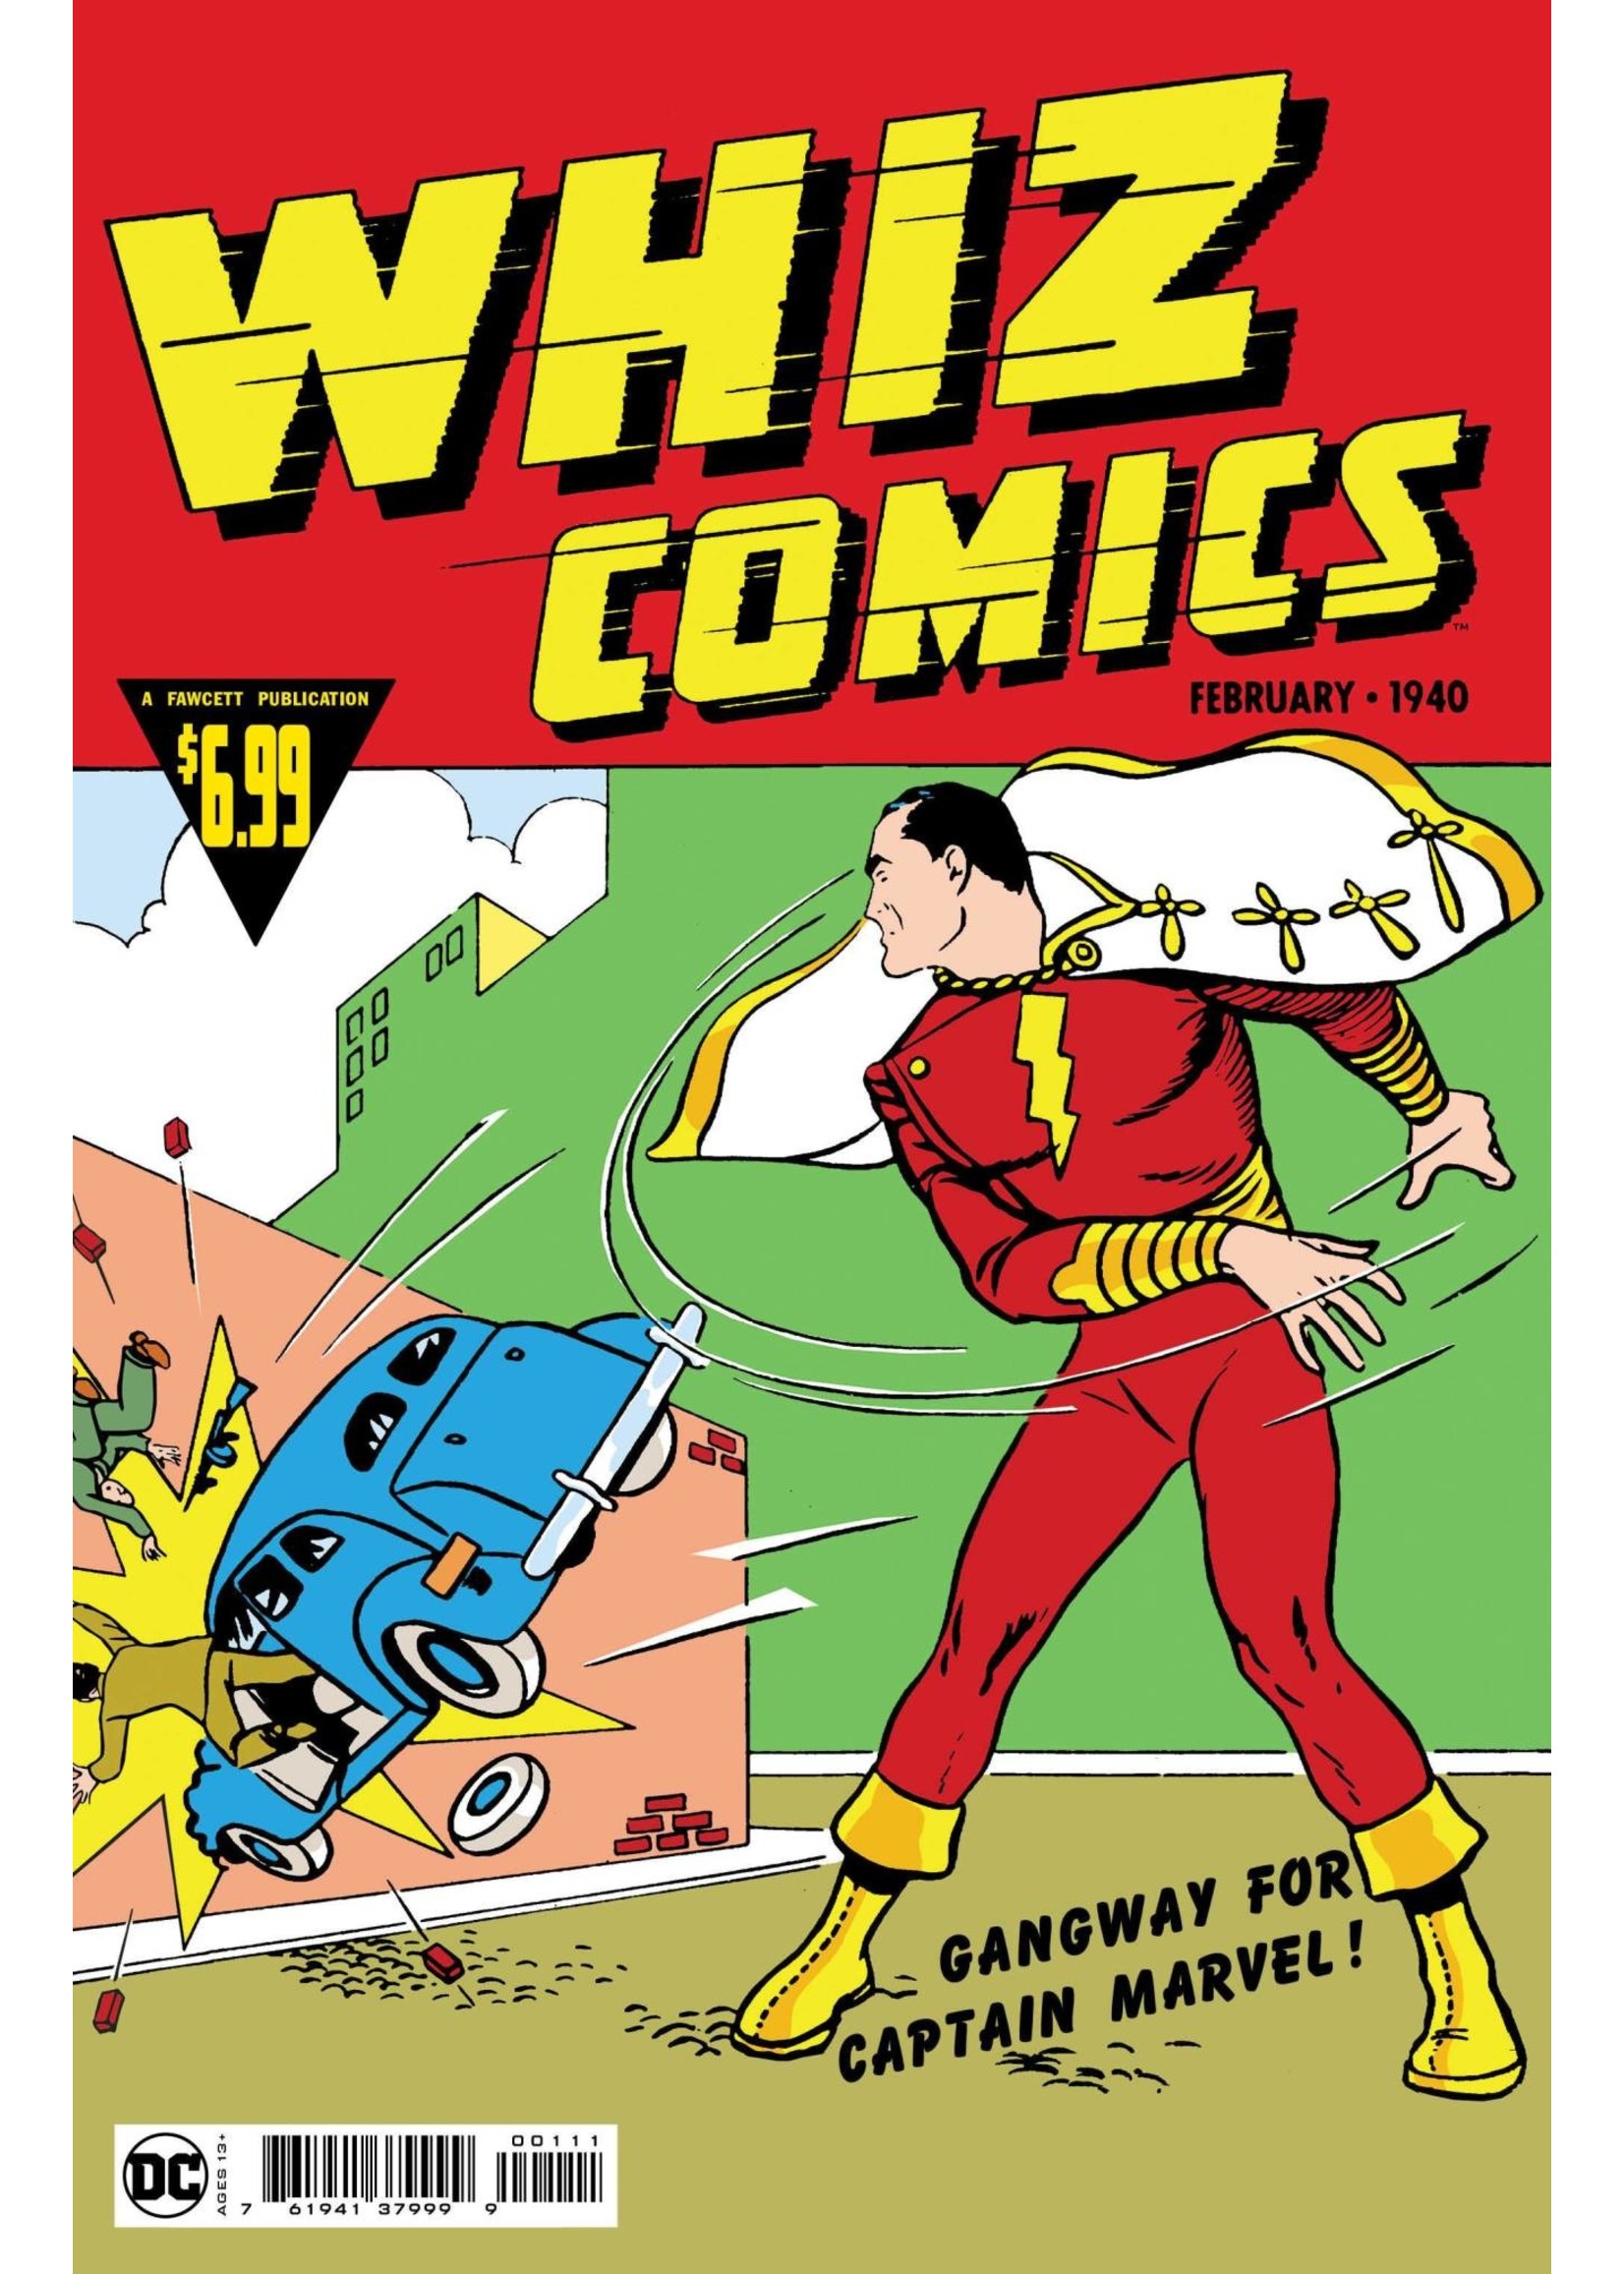 DC COMICS WHIZ COMICS #2 FACSIMILE EDITION